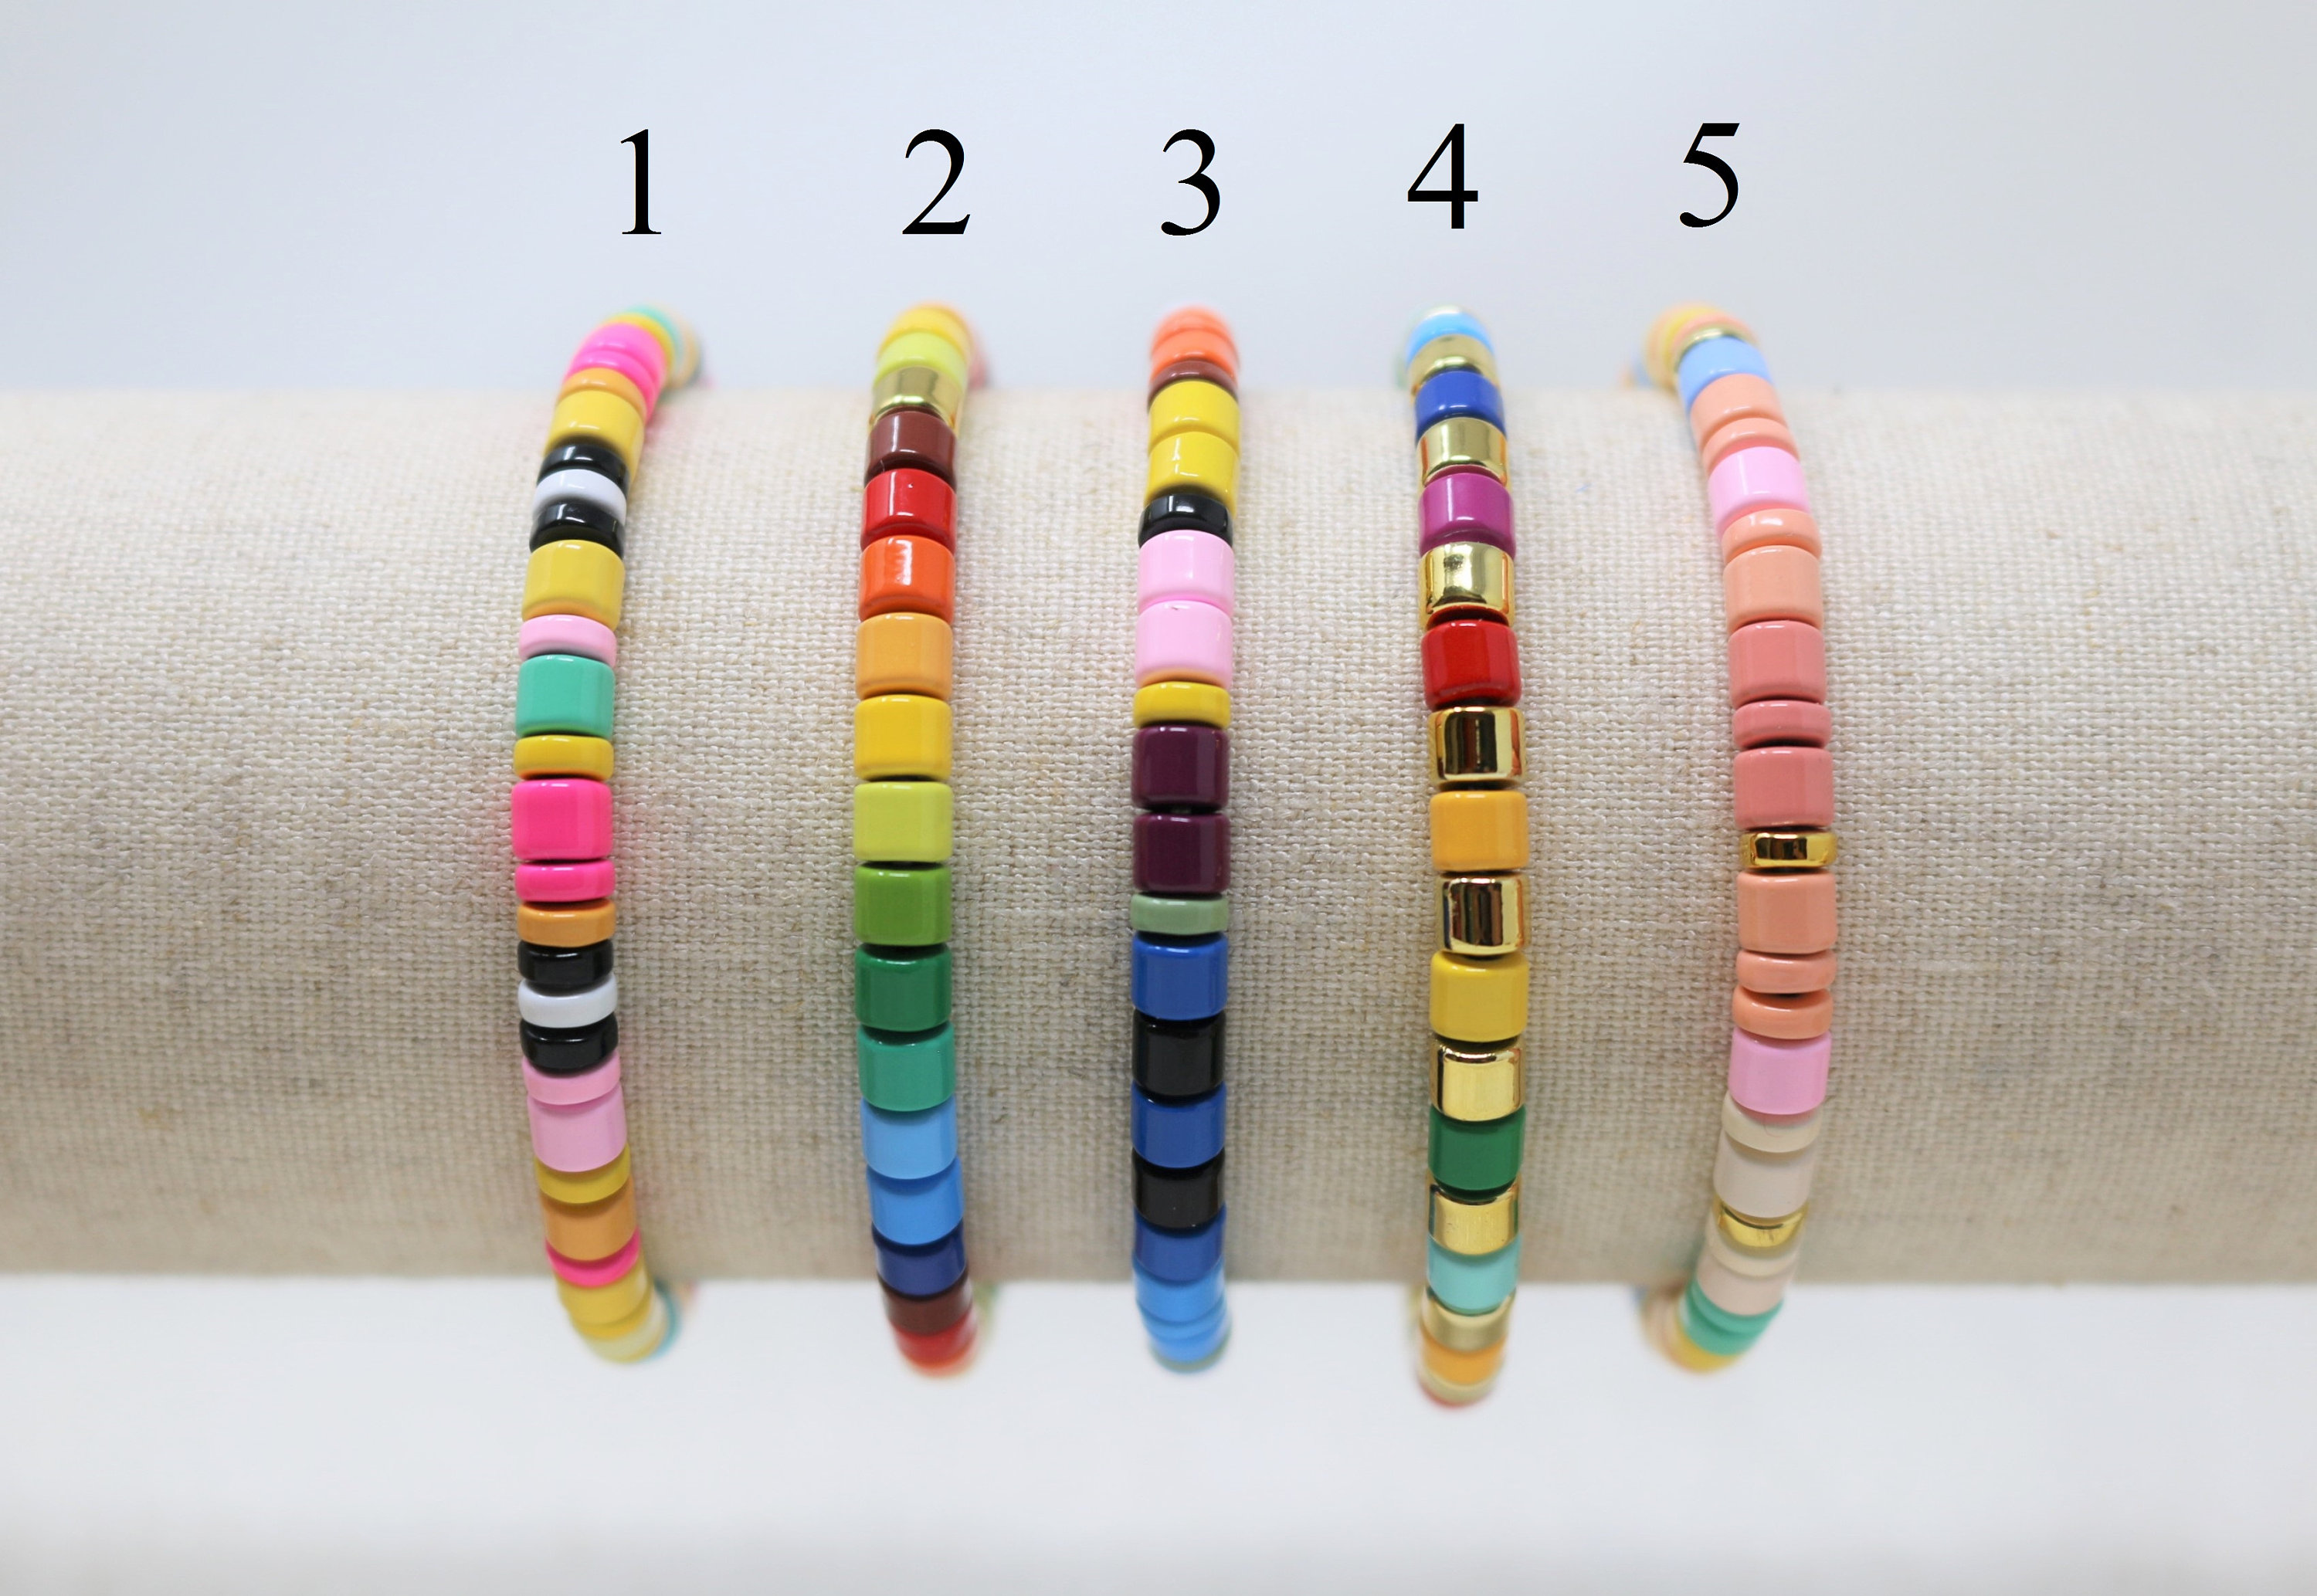 Stretch Beaded Bracelet, Stretch Colored Beads Bracelet, Handmade